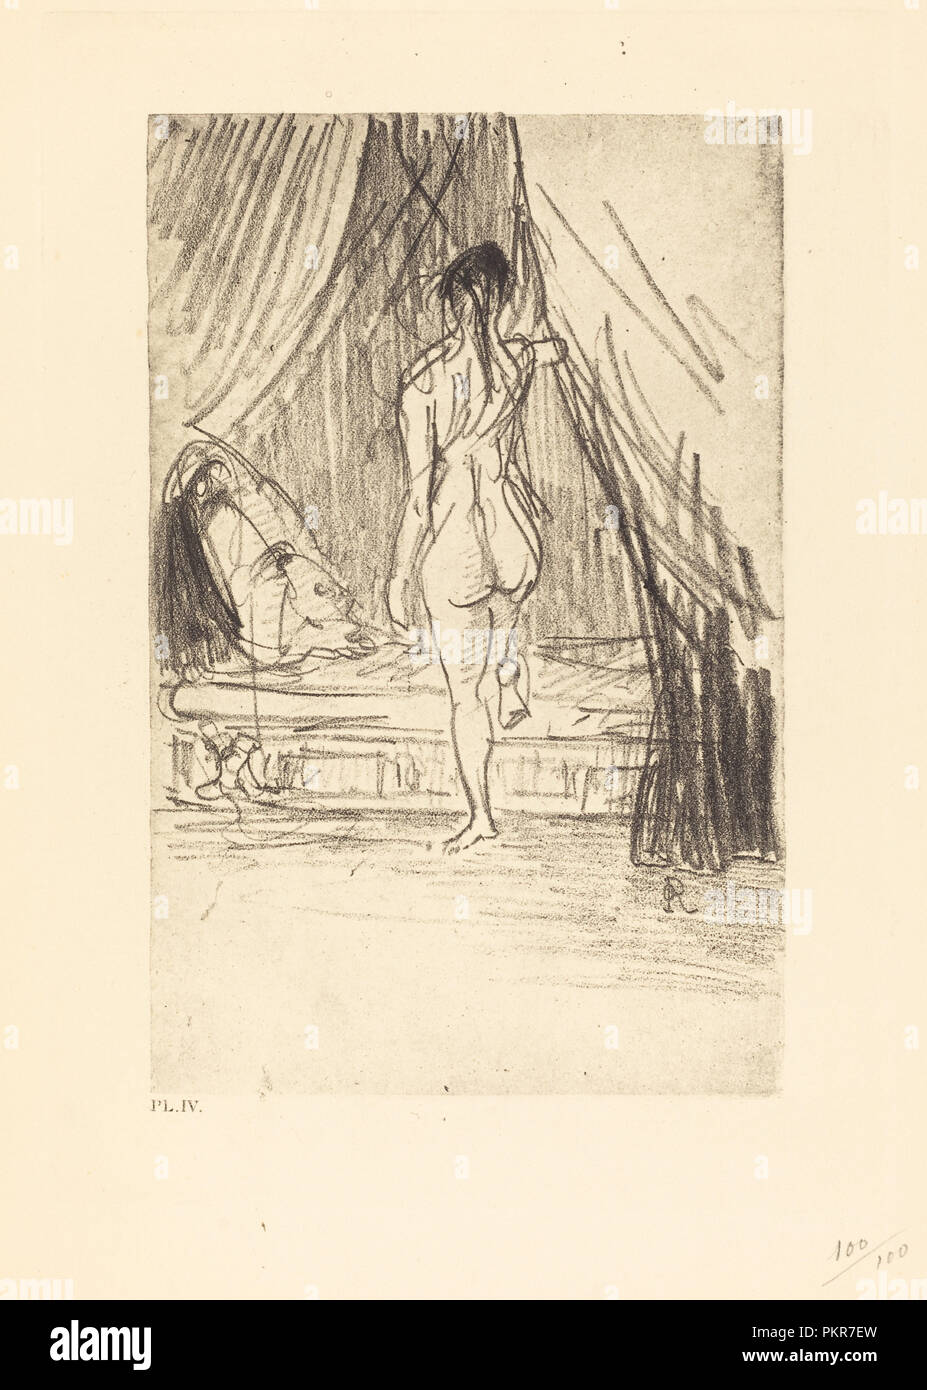 Volupte, Fantome Elastique! (Pleasure, elastic phantom!). Dated: 1890. Medium: lithograph. Museum: National Gallery of Art, Washington DC. Author: Odilon Redon. Stock Photo